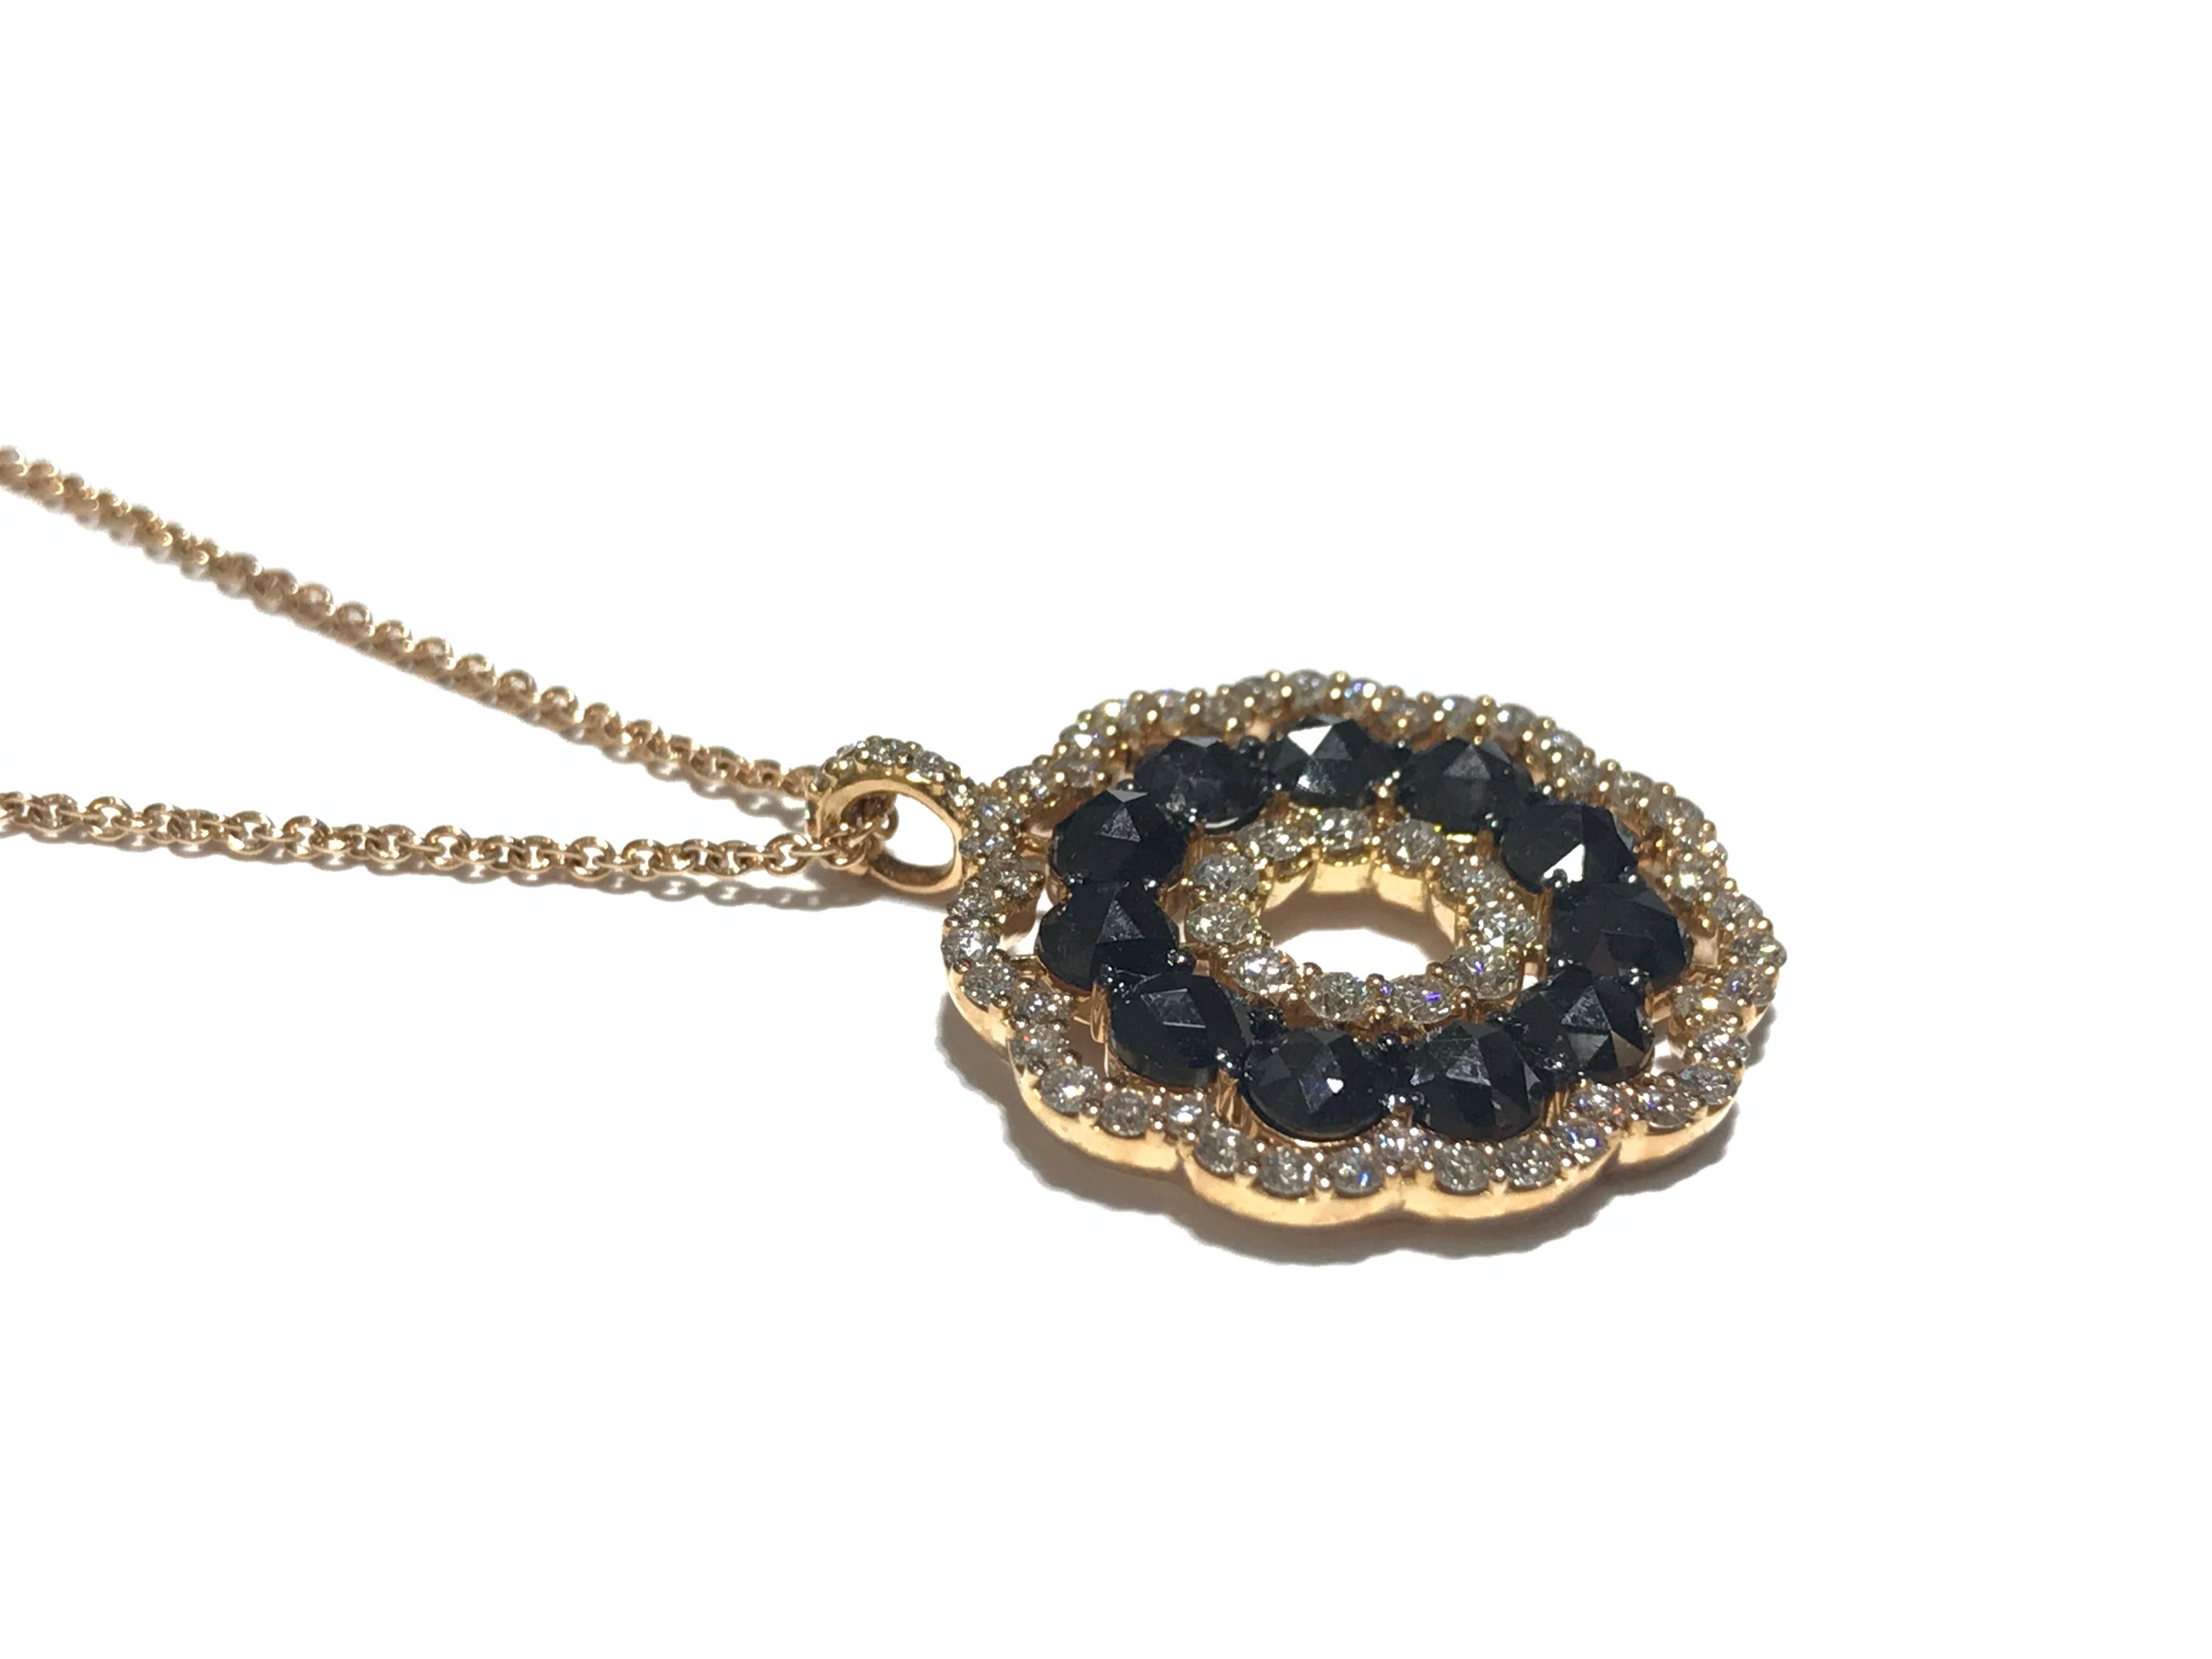 Crivelli Circle of Life pendant Necklace with black and white diamonds 
0.75 carat white diamonds VS clarity F colour
1.68 carat black diamonds 
16 inch chain in 18 karat rose gold 
